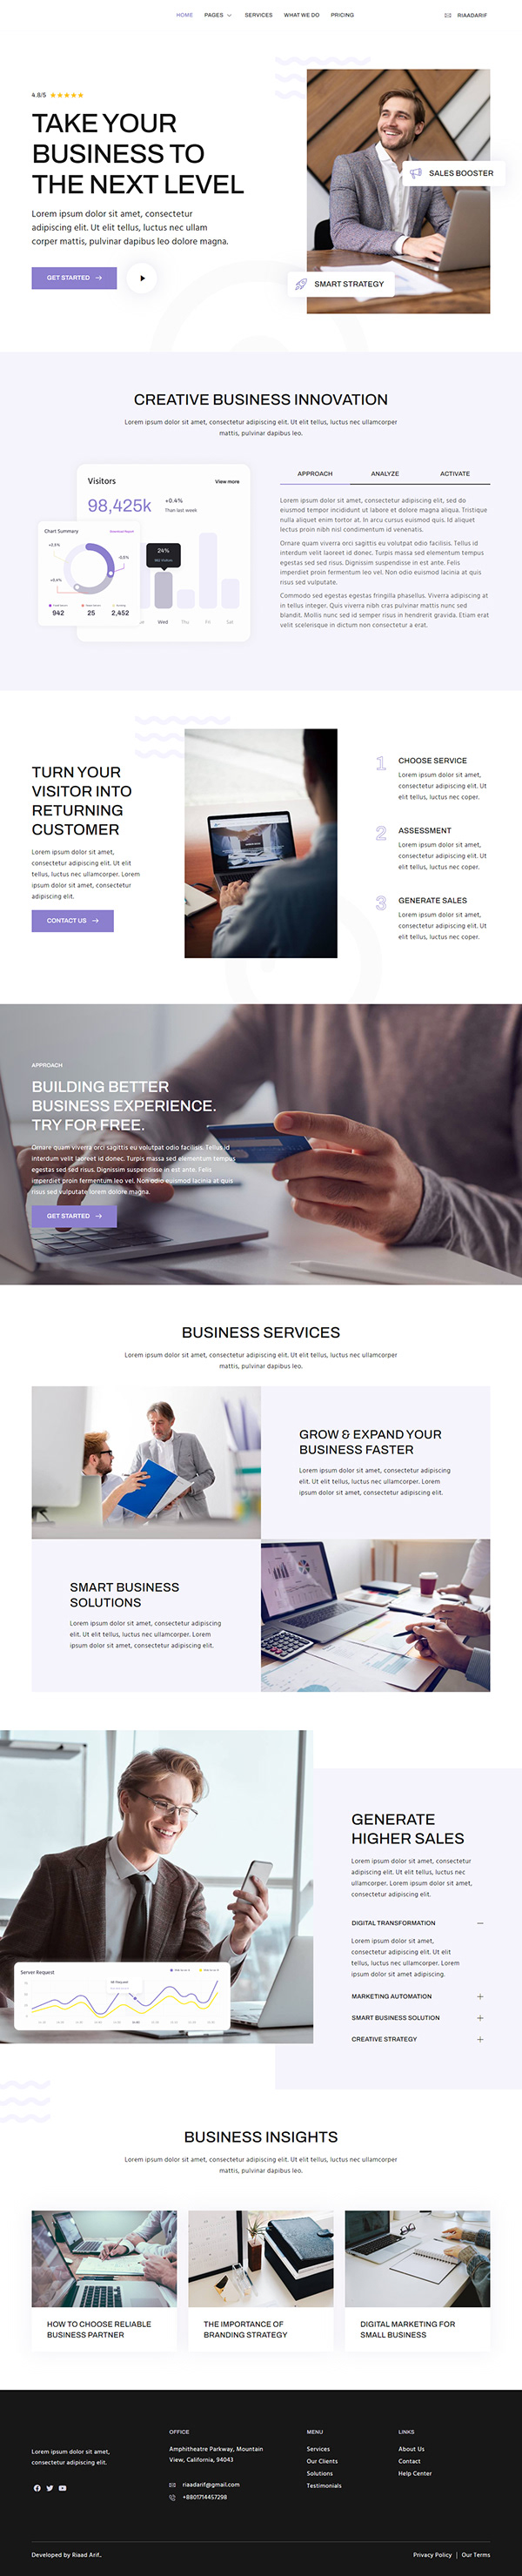 Multipurpose Business & Marketing Agency Website